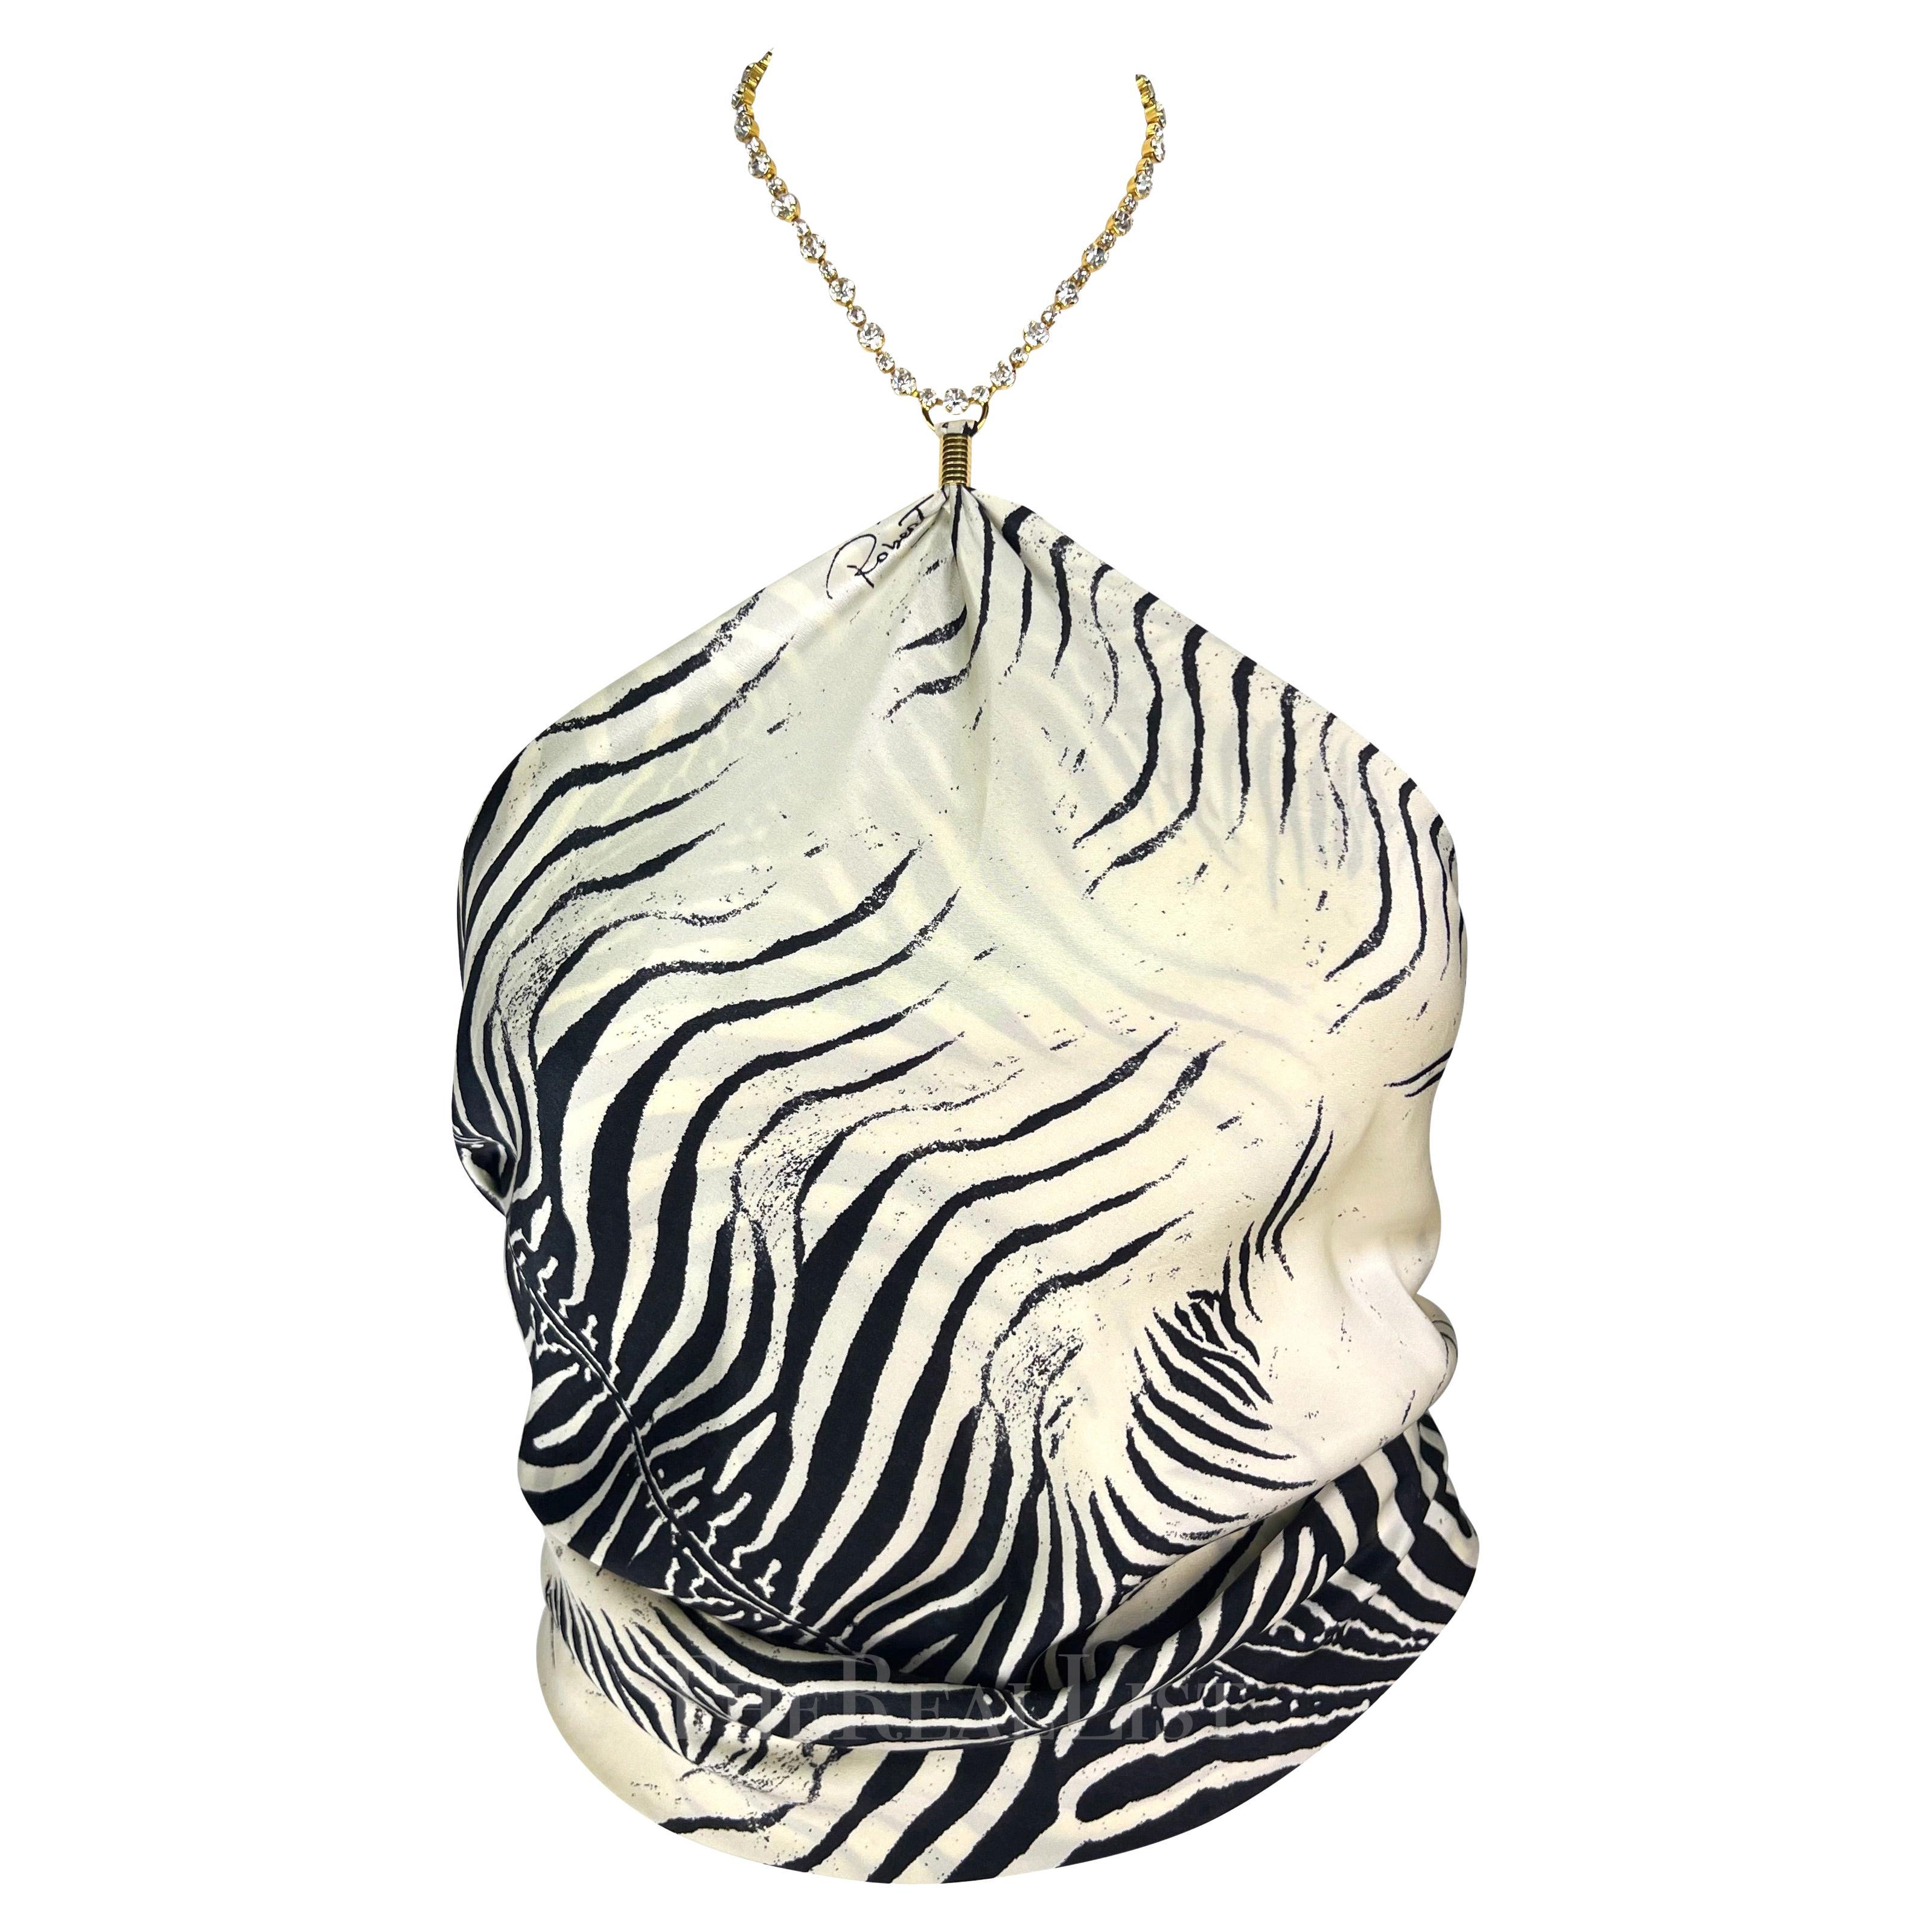 S/S 2000 Roberto Cavalli Rhinestone Zebra Print Triangle Silk Scarf Crop Top For Sale